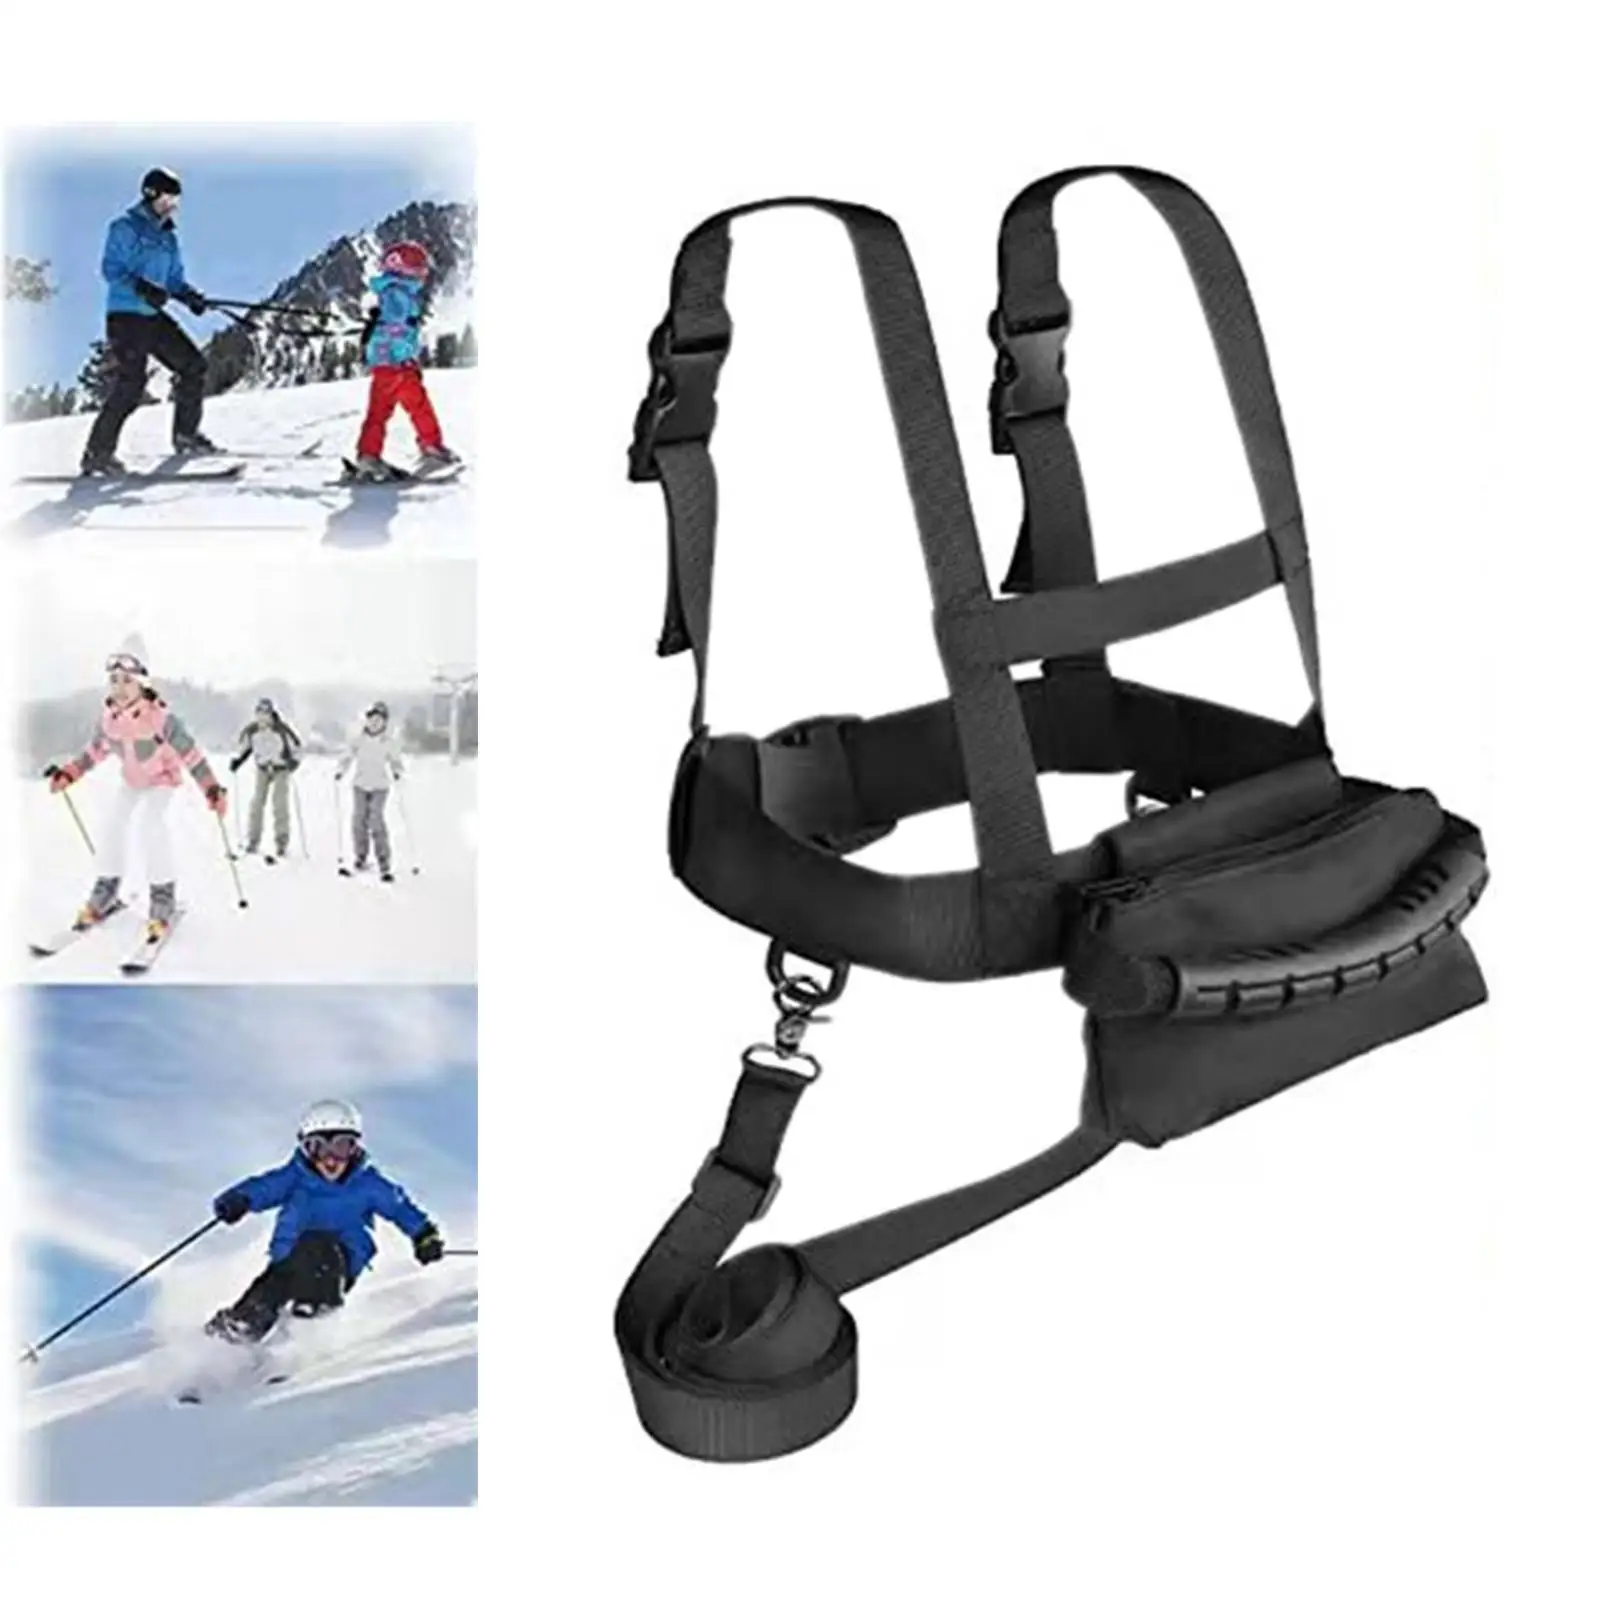 Kids Ski Shoulder Harness Leash Snowboard Harness Trainer with Removable Leash for Children and Beginner Roller Skating Teaching